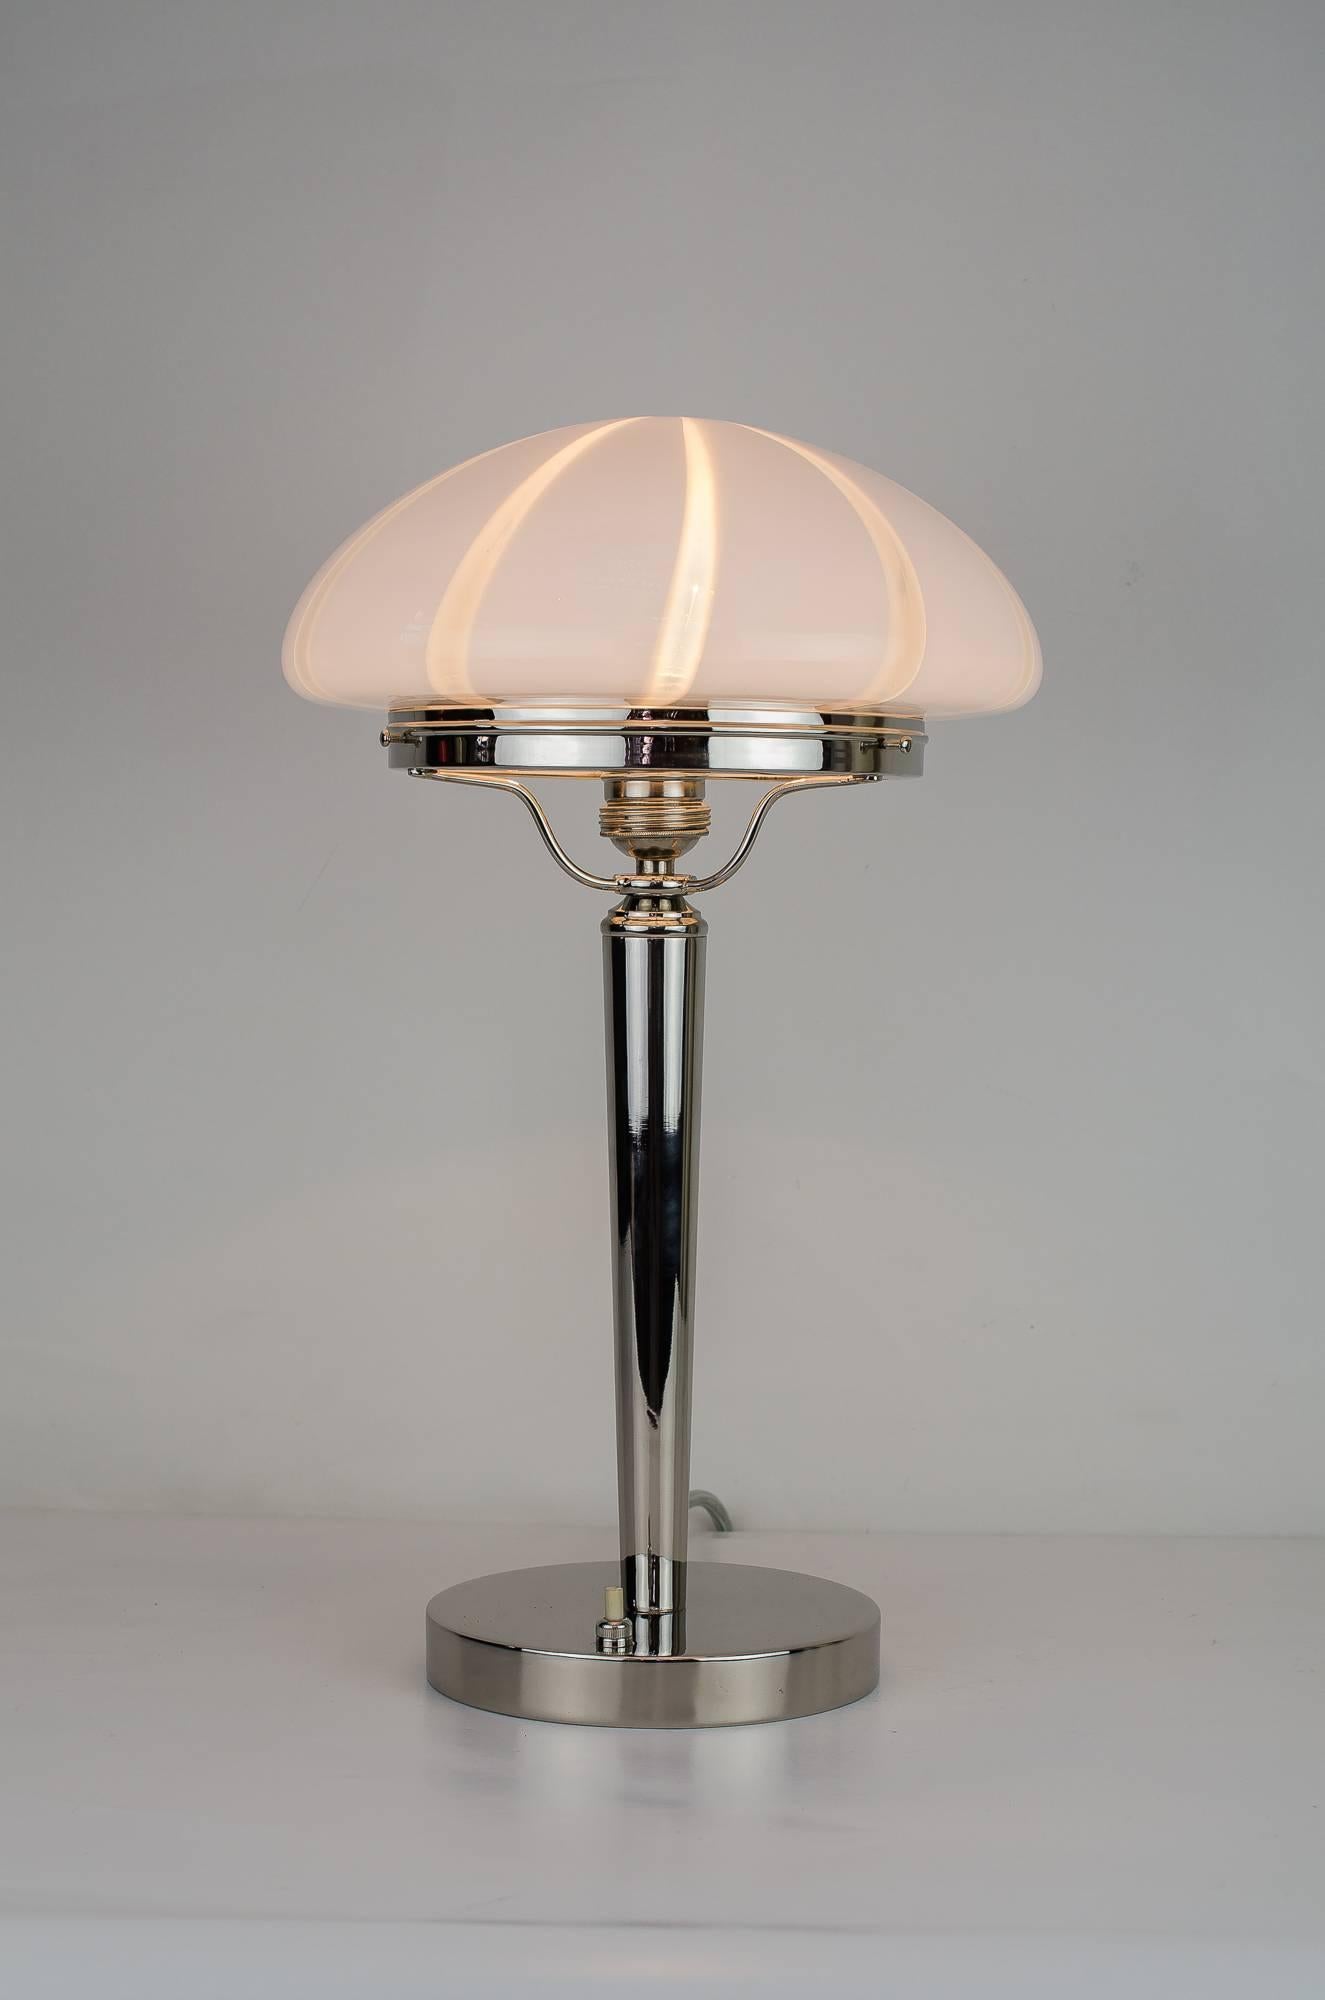 Art Deco table lamp, circa 1920s
Original glass shade
Nickel-plated.
 